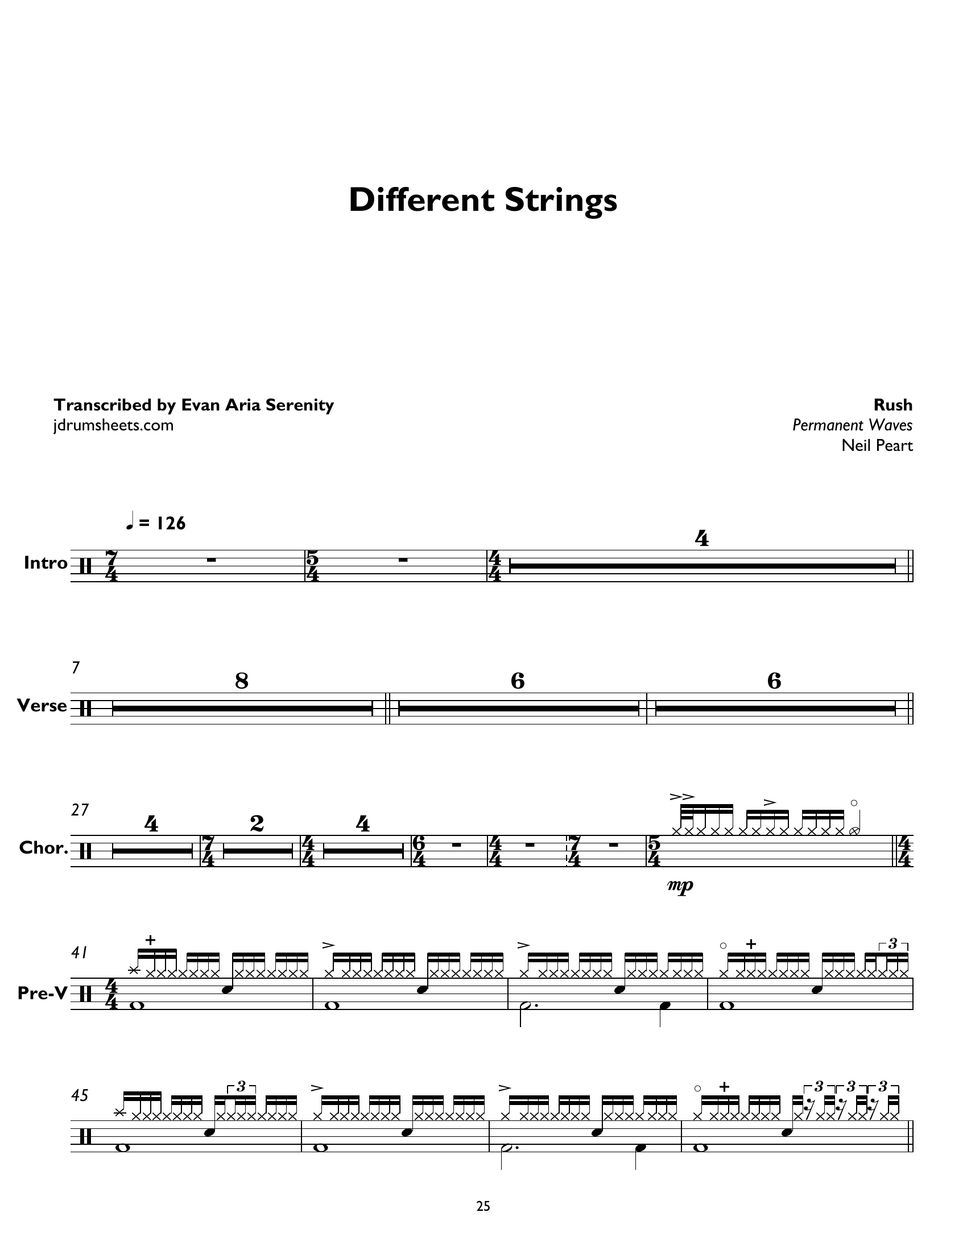 Rush - Different Strings by Evan Jaslow